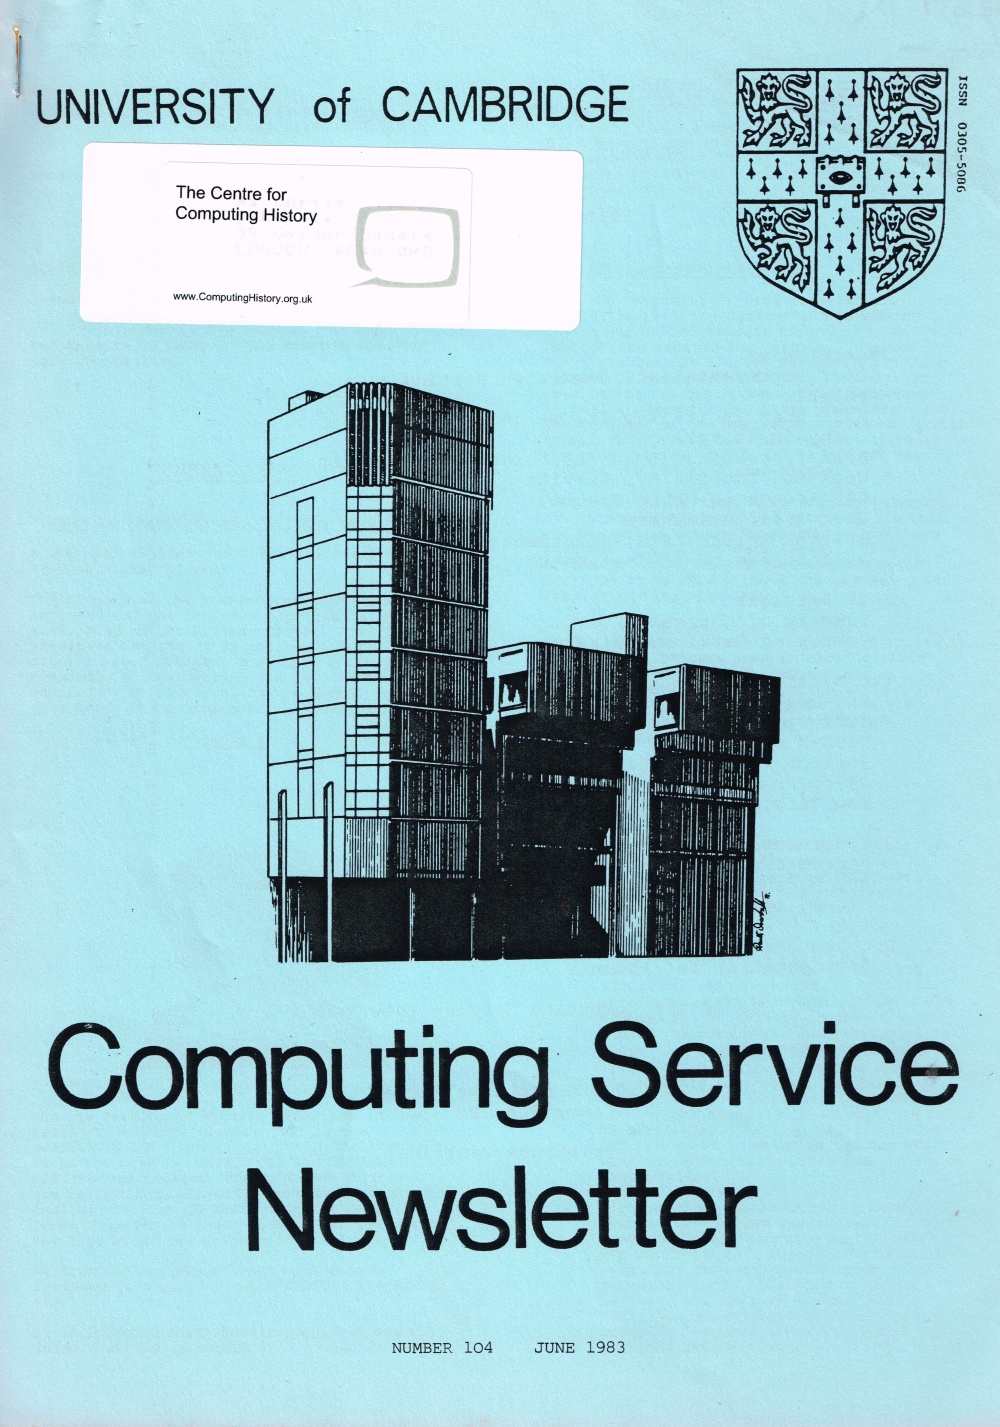 Article: University of Cambridge Computing Service June 1983 Newsletter 104